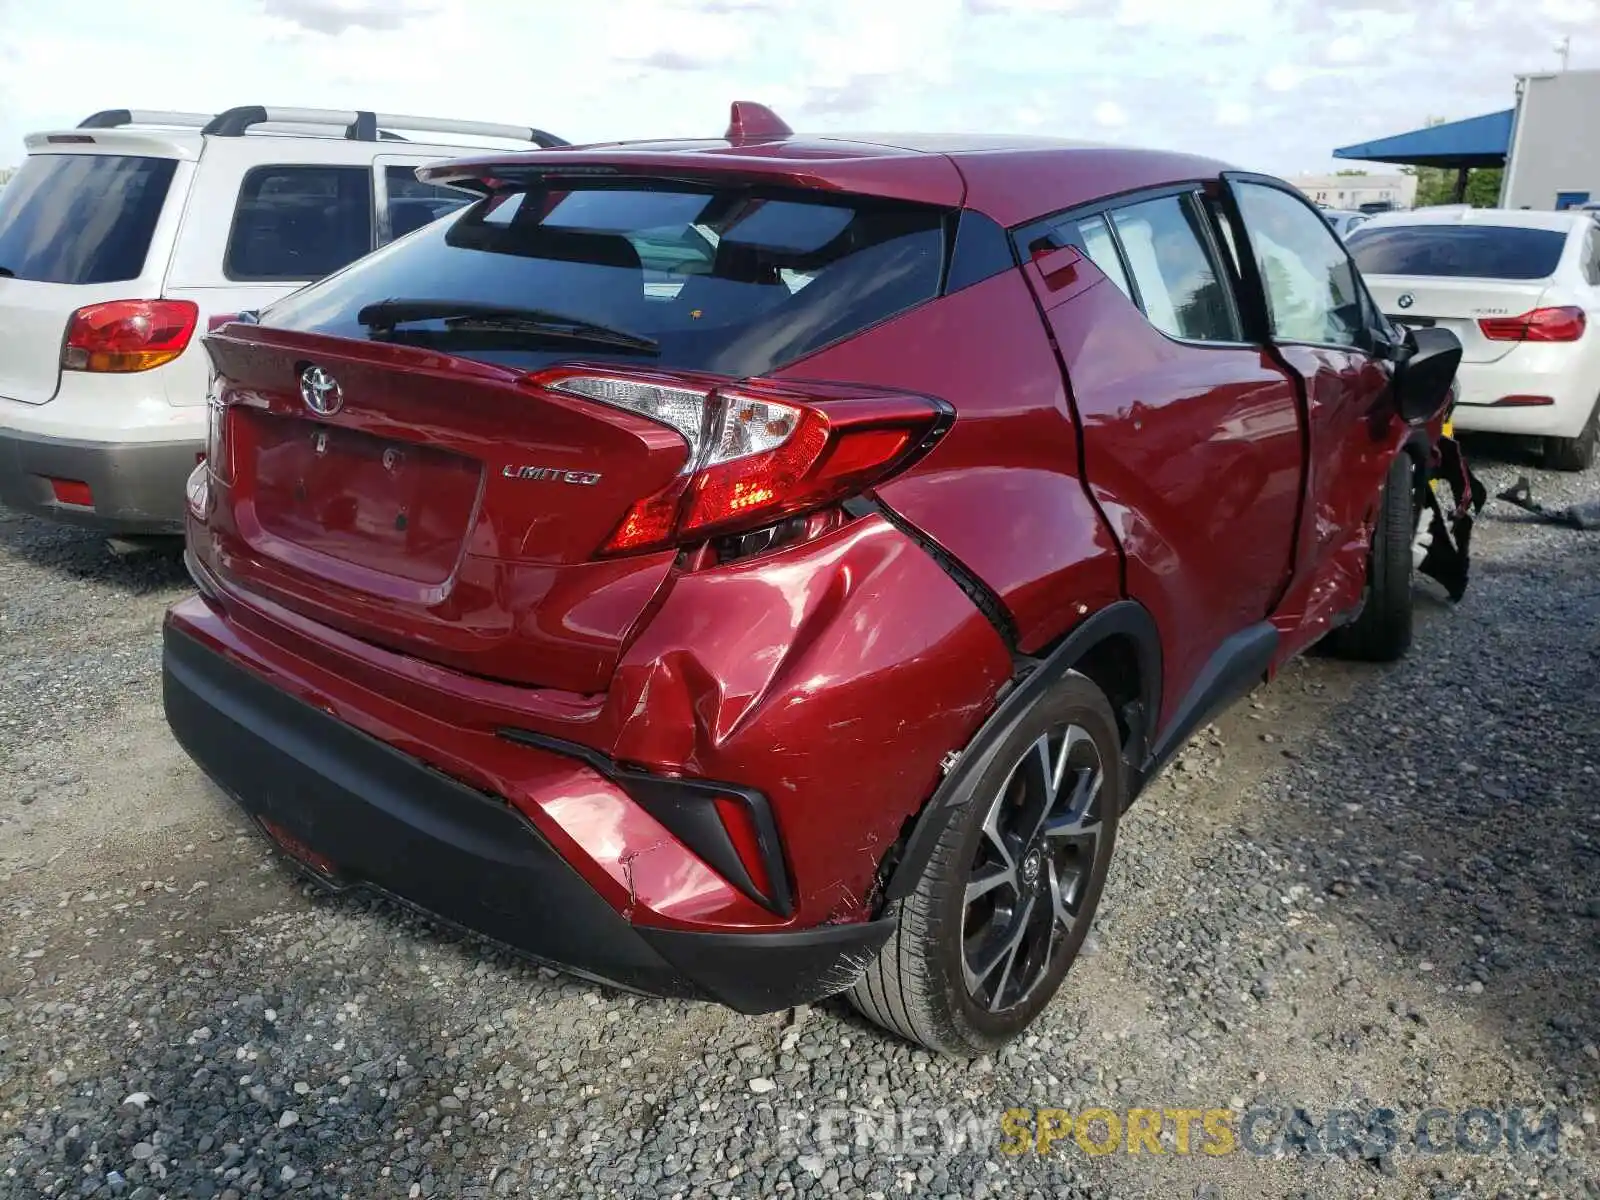 4 Photograph of a damaged car NMTKHMBX5KR090215 TOYOTA C-HR 2019